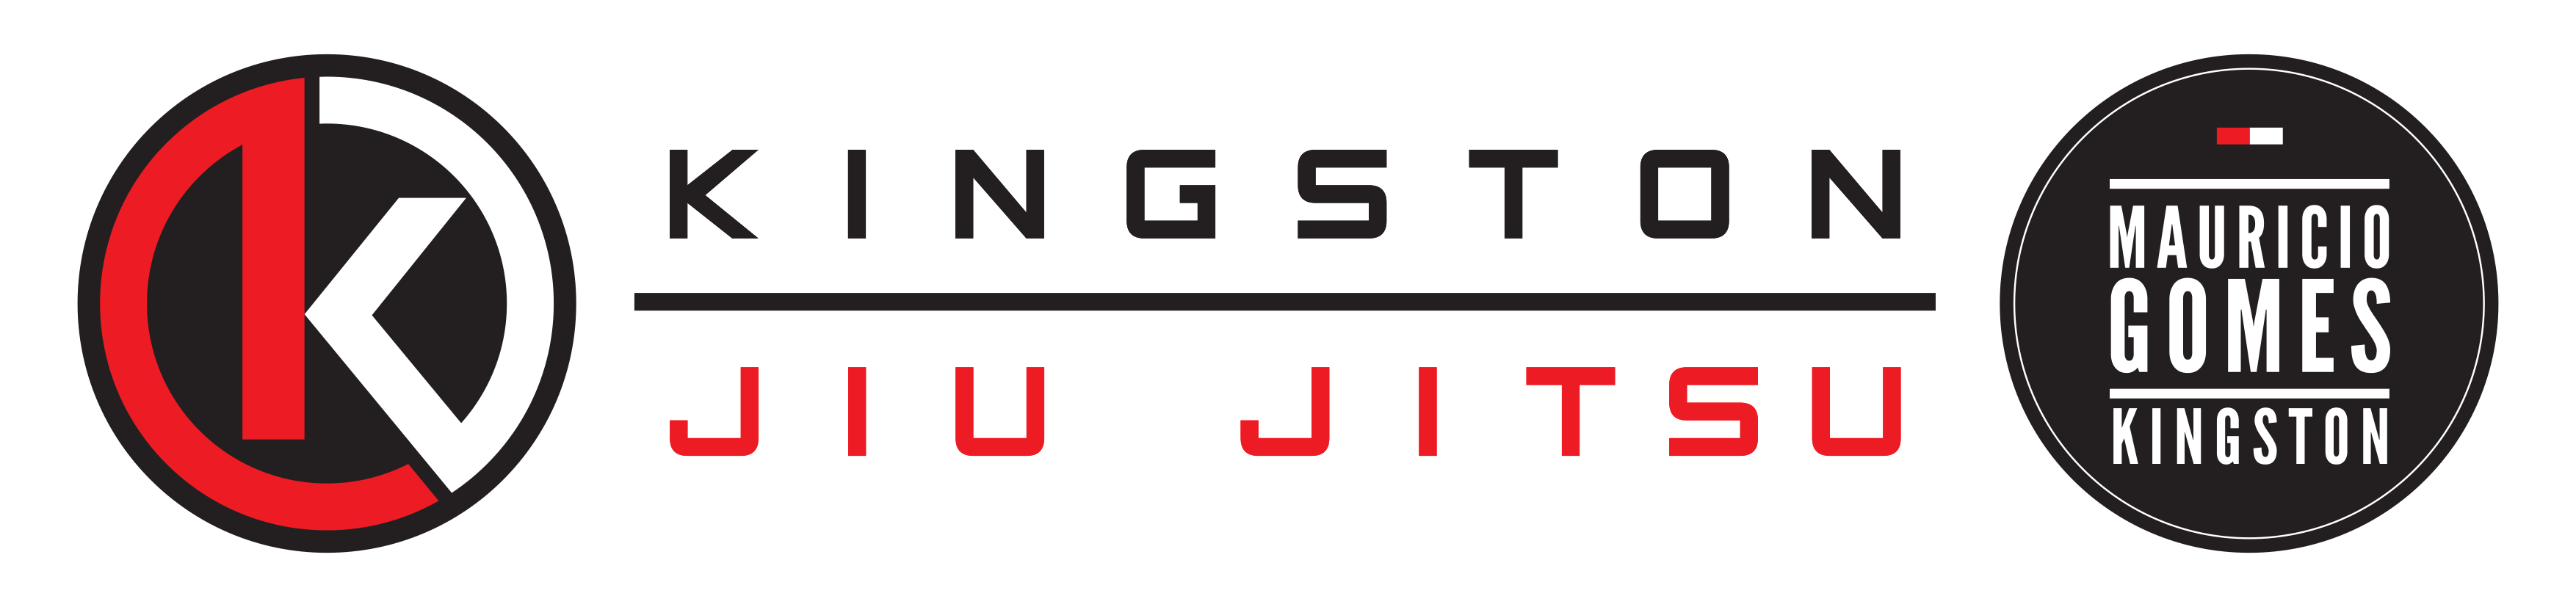 Kingston Jiu Jitsu Logo small